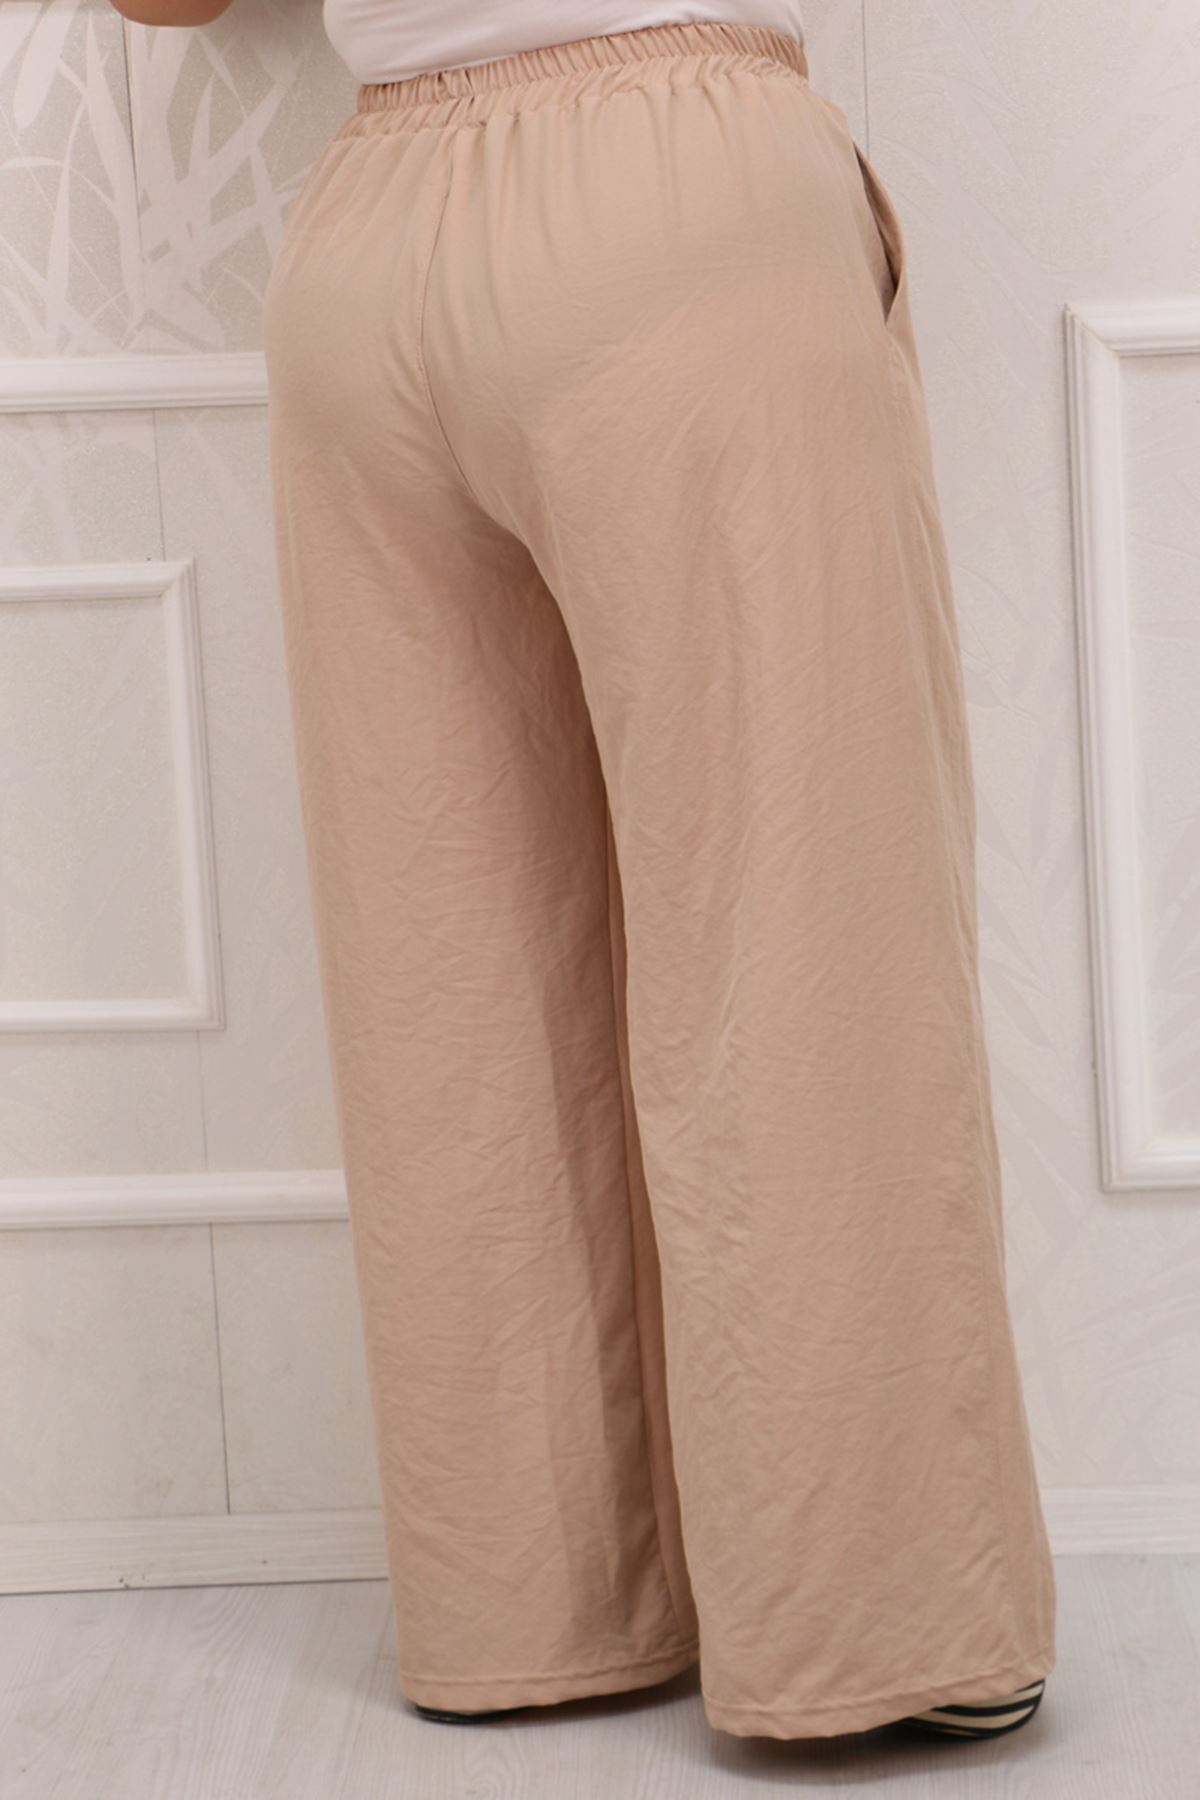 39024 Large Size Star Airobin Slim Leg Pants With Elastic Waist -Beige